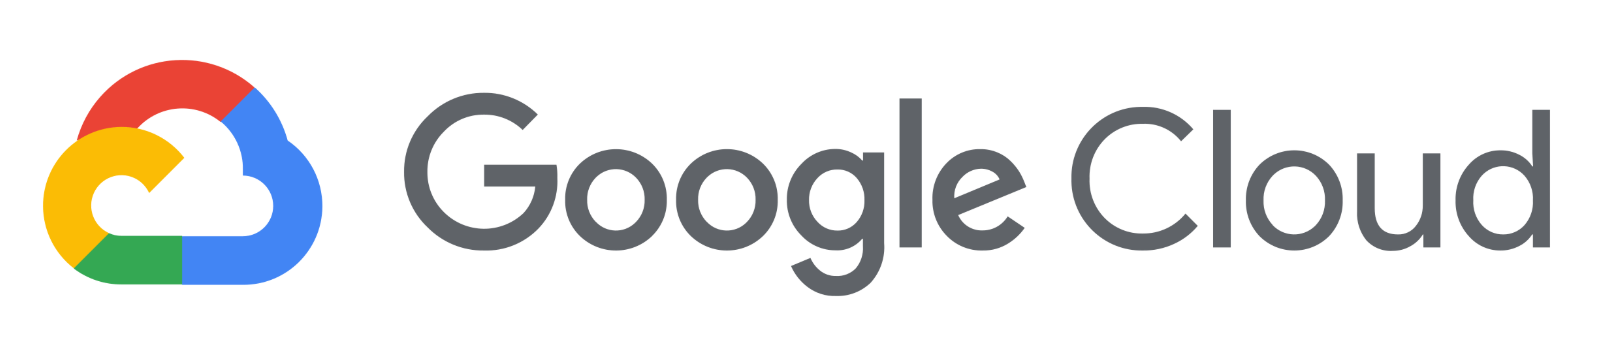 Google cloud platform logo.wine